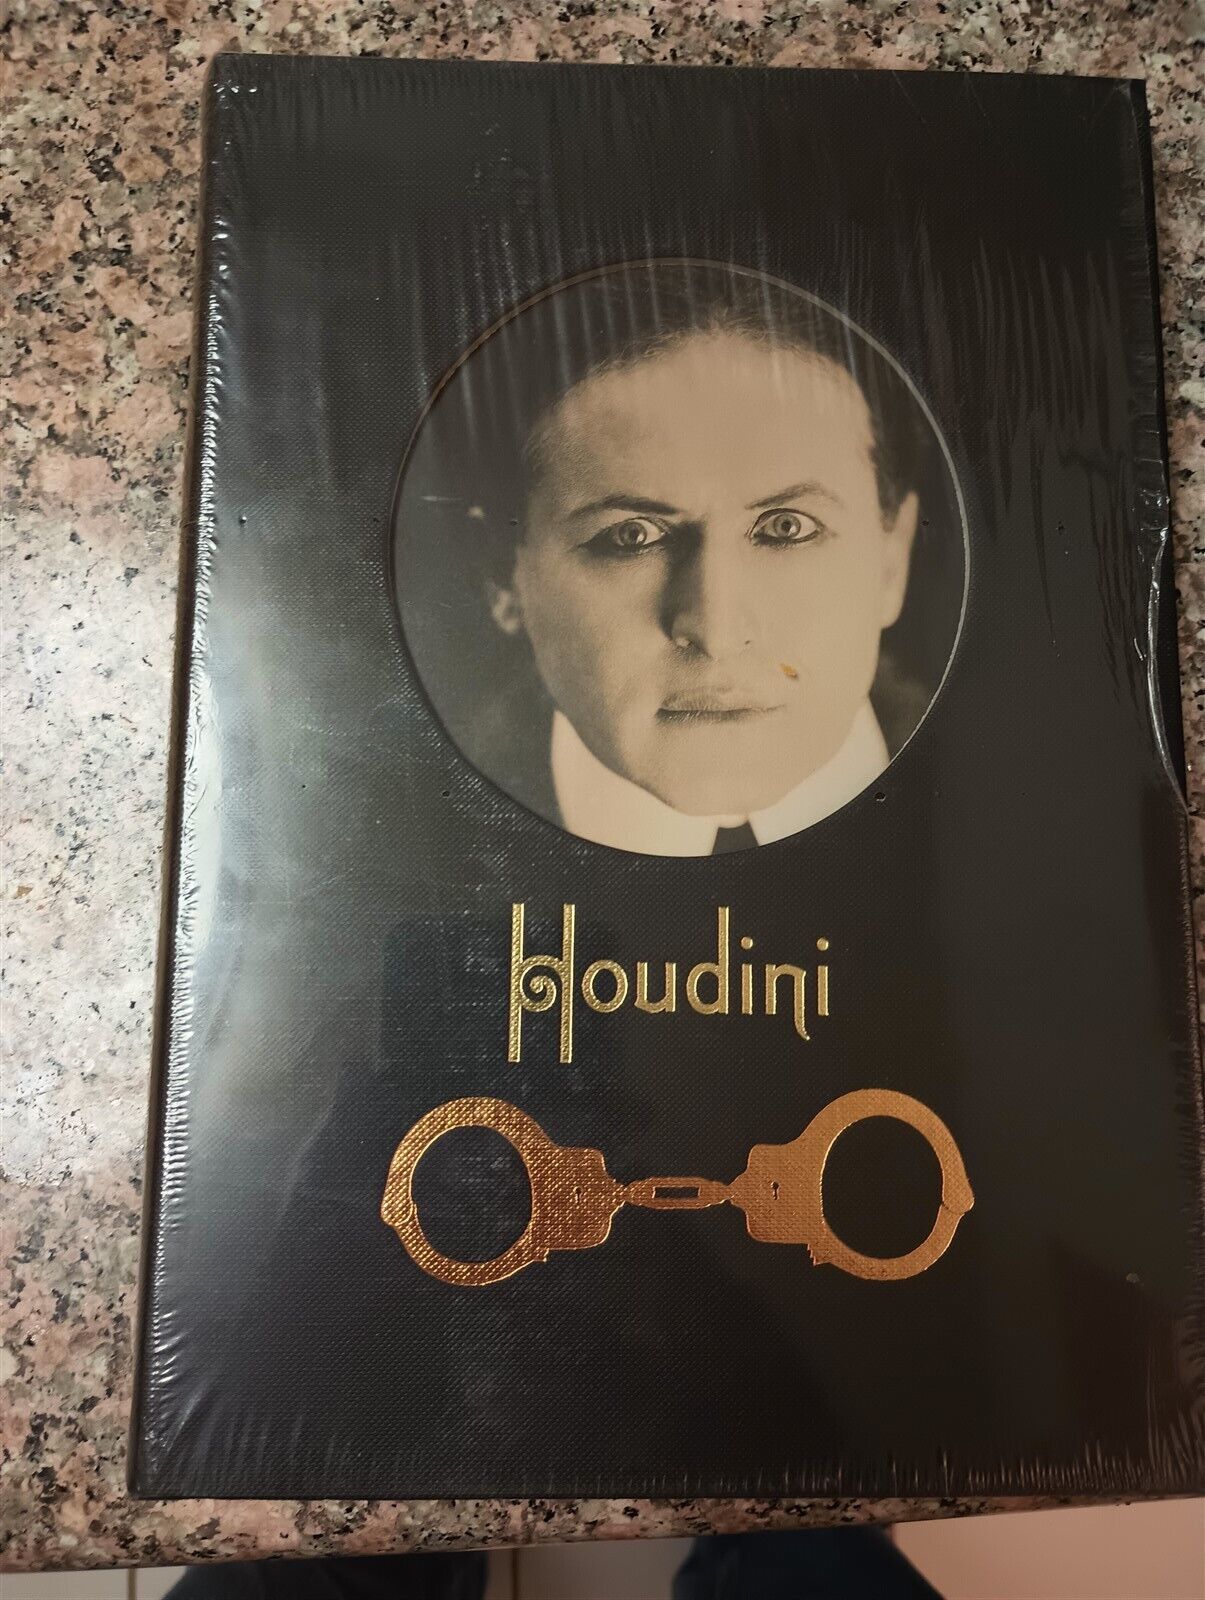 Houdini: Art and Magic Hardcover 1st Edition DJ October 29, 2010 Jewish Edition